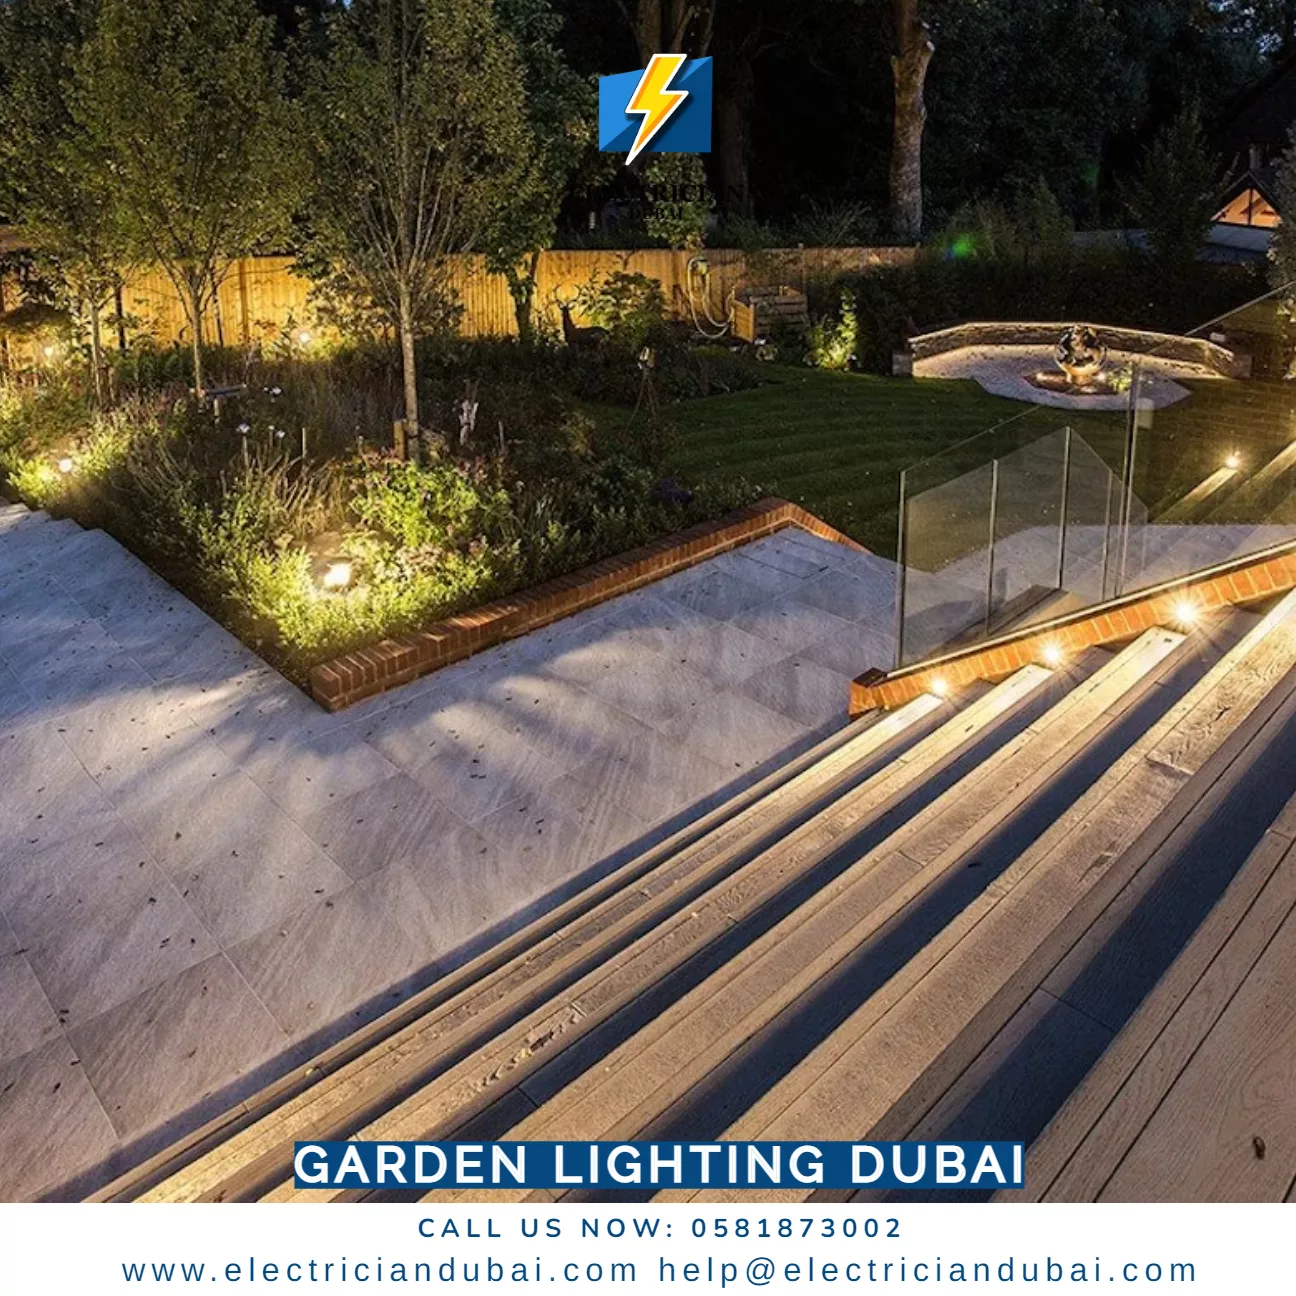 Garden Lighting Dubai